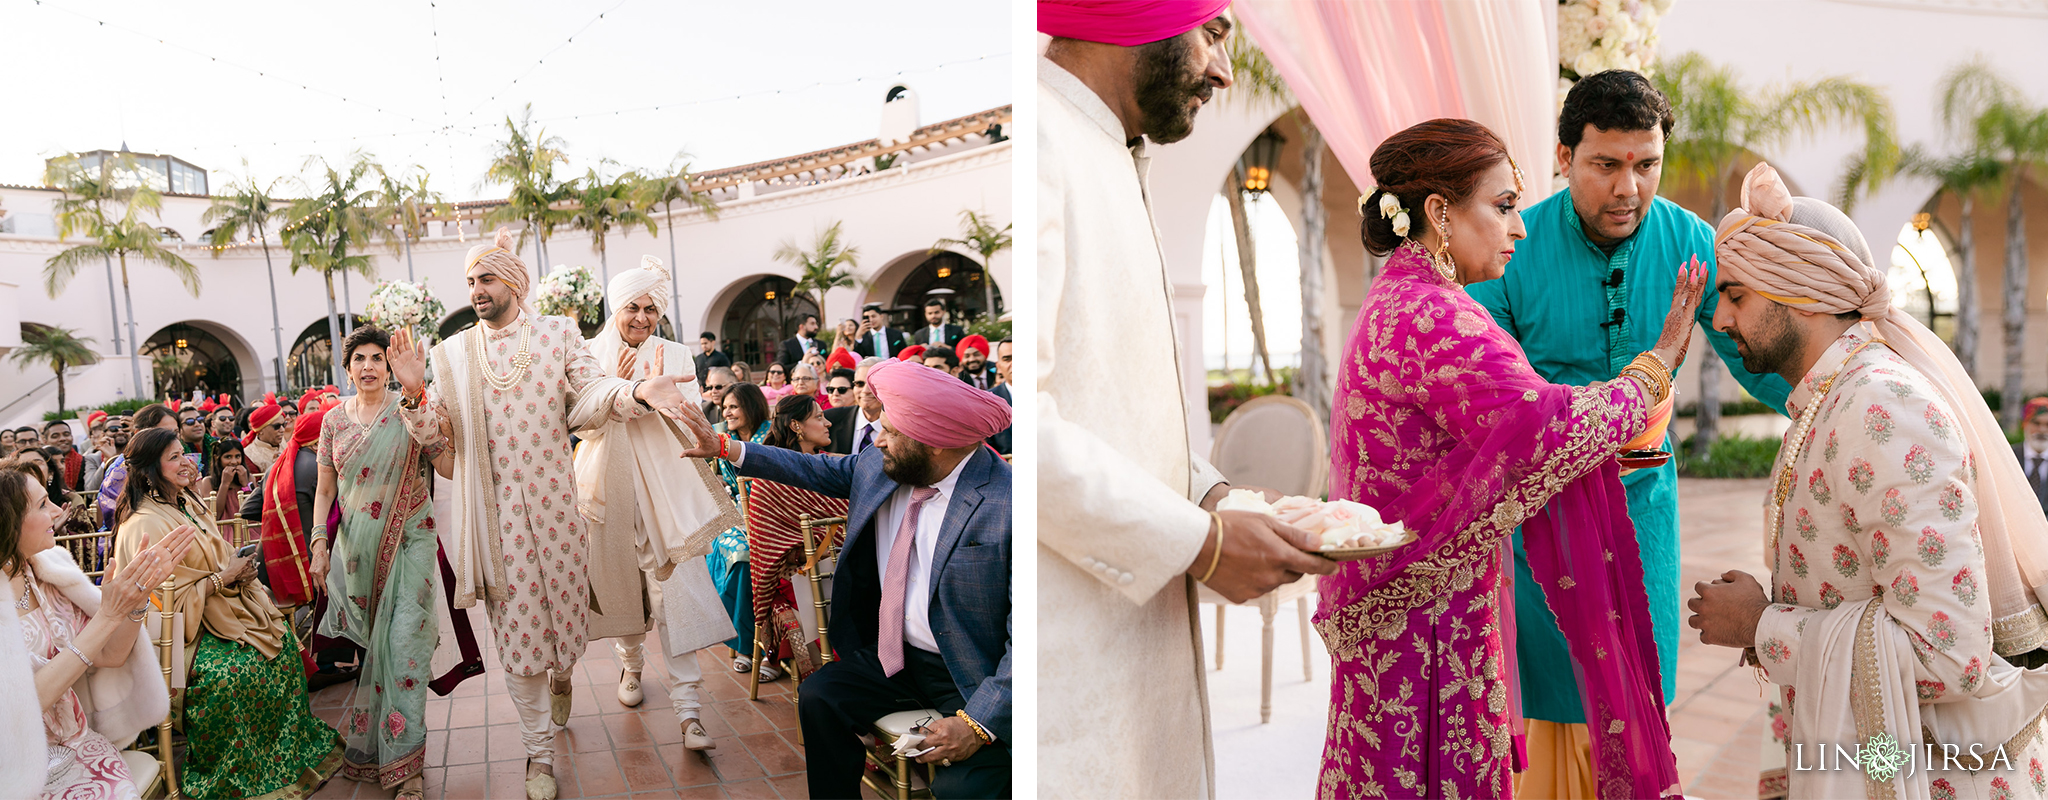 47 Hilton Santa Barbara Beachfront Resort Hindu Wedding Ceremony Photography